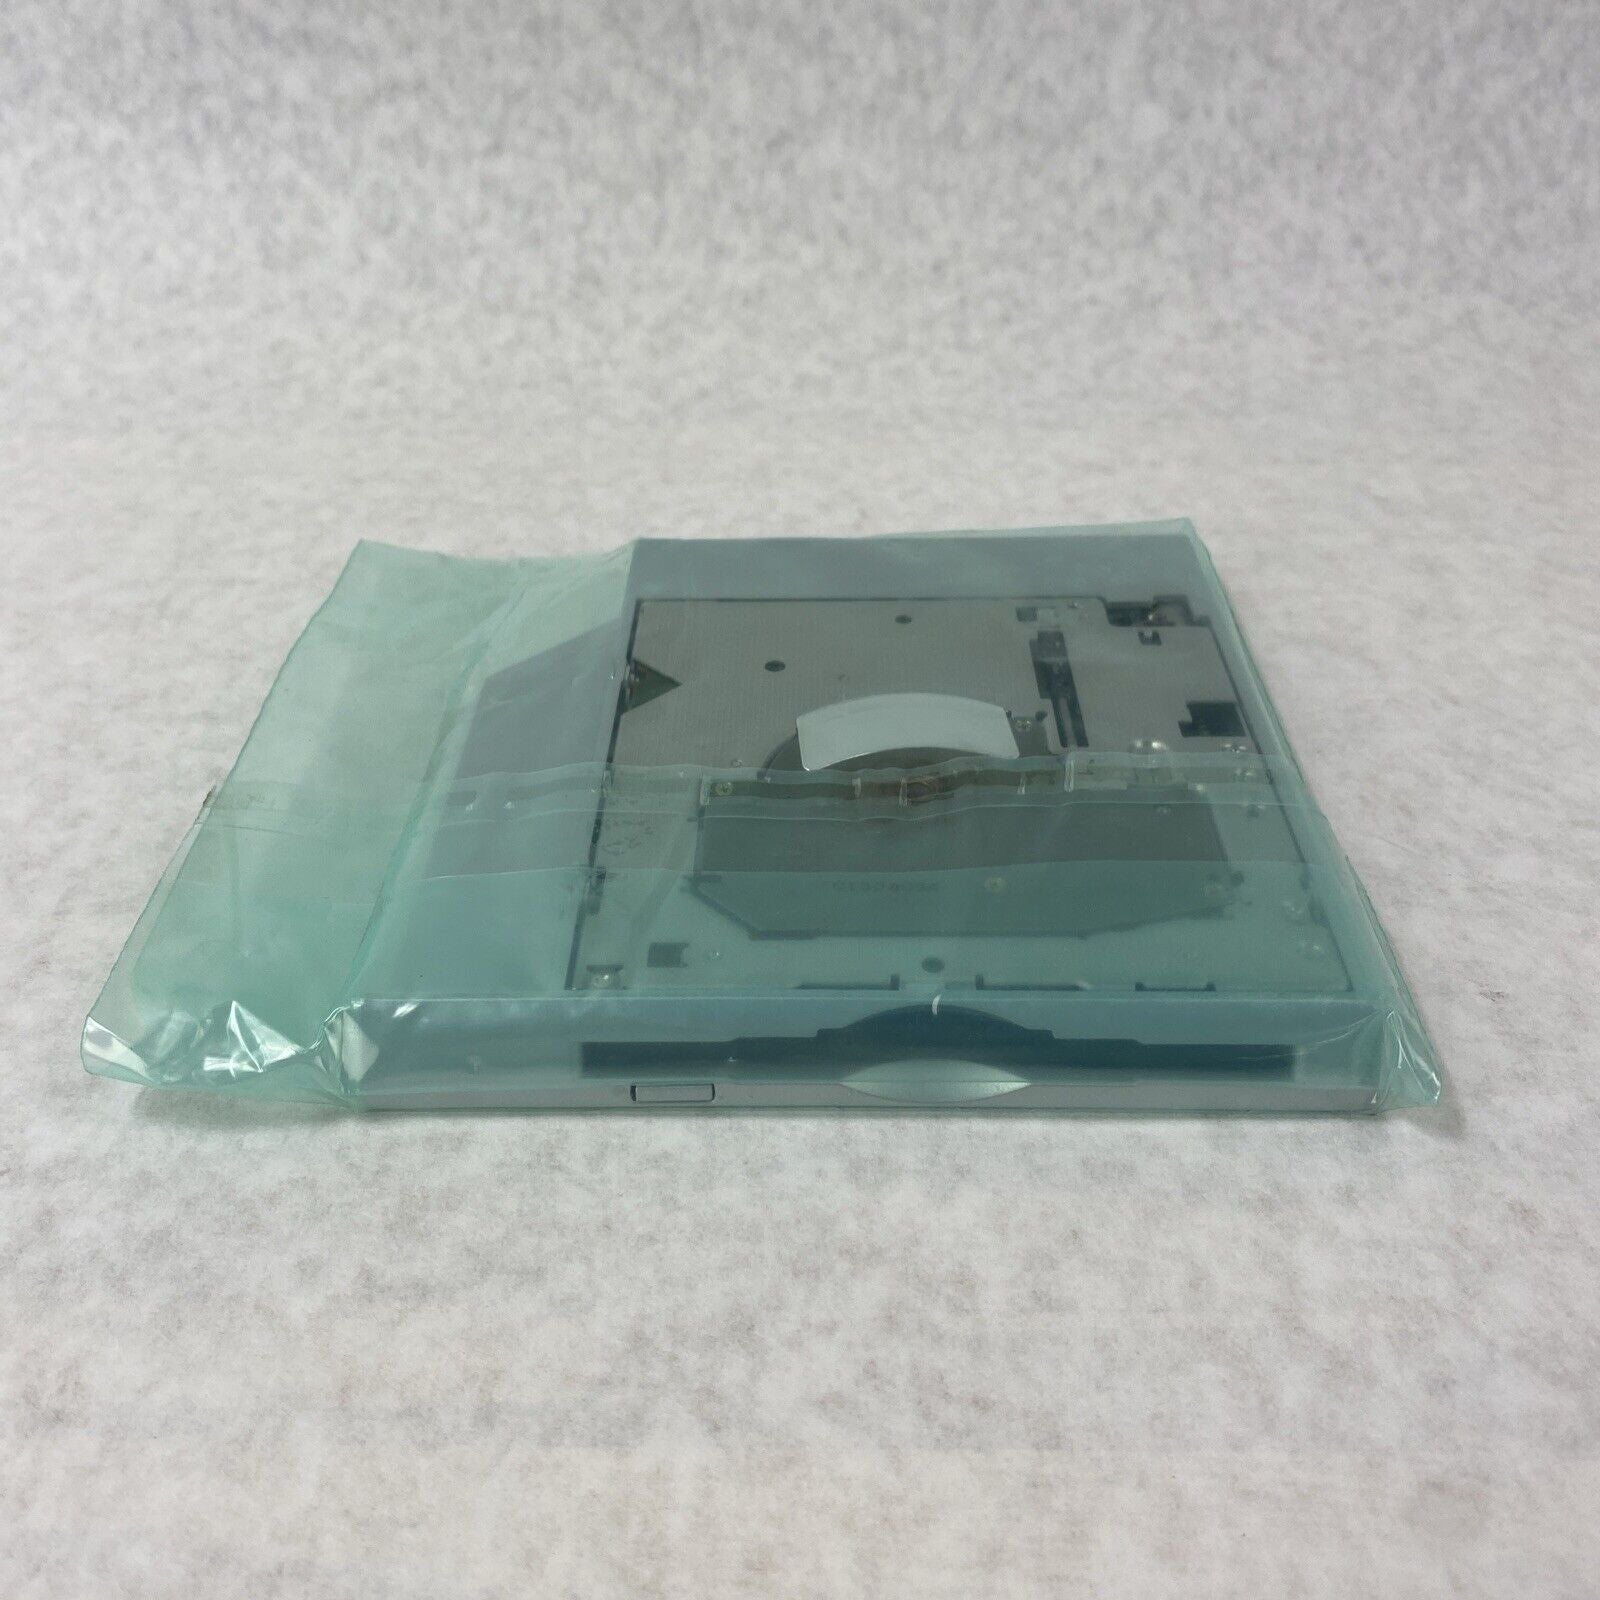 Panasonic 5502192 JU-226A243FC Internal 3.5" Floppy Disk Drive